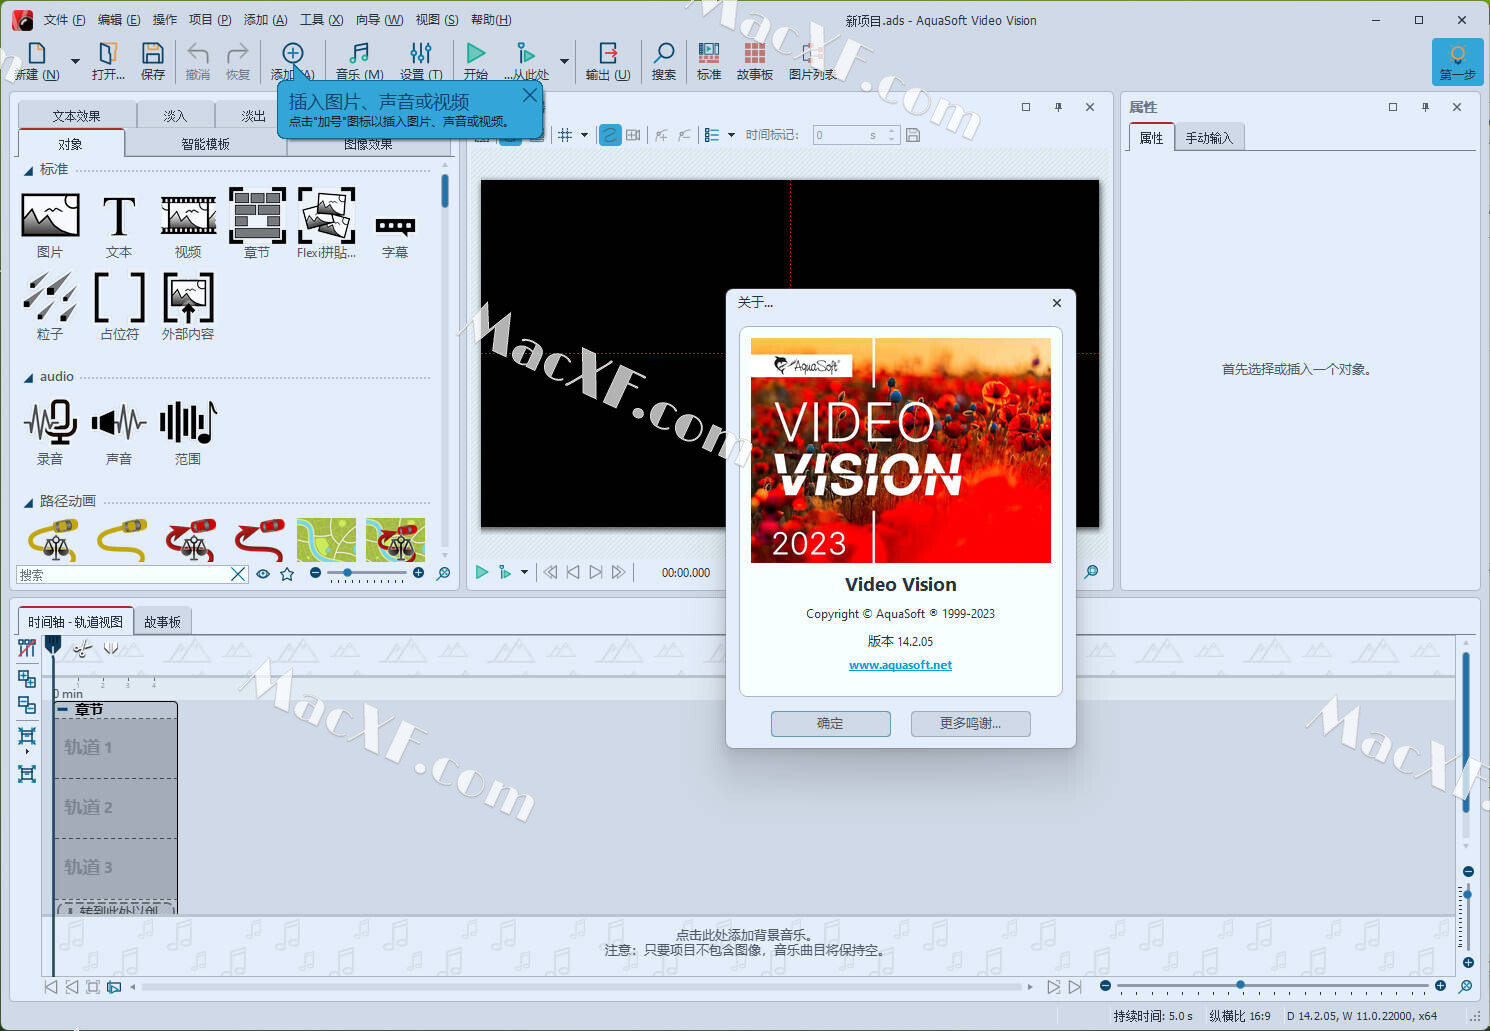 AquaSoft Video Vision 14.2.09 for windows instal free